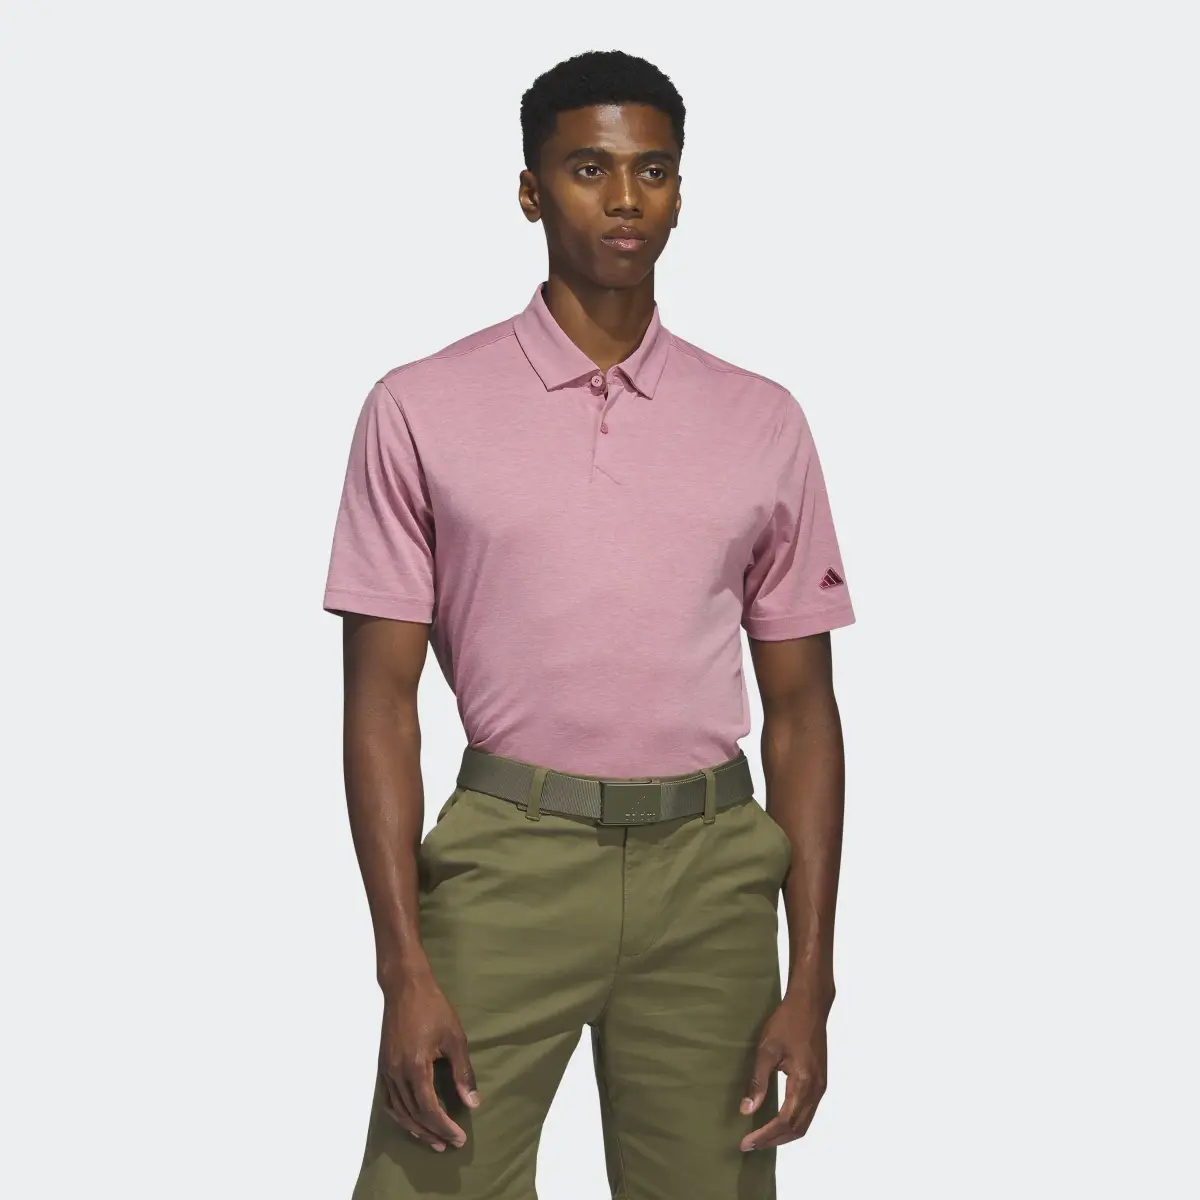 Adidas Go-To Golf Polo Shirt. 2